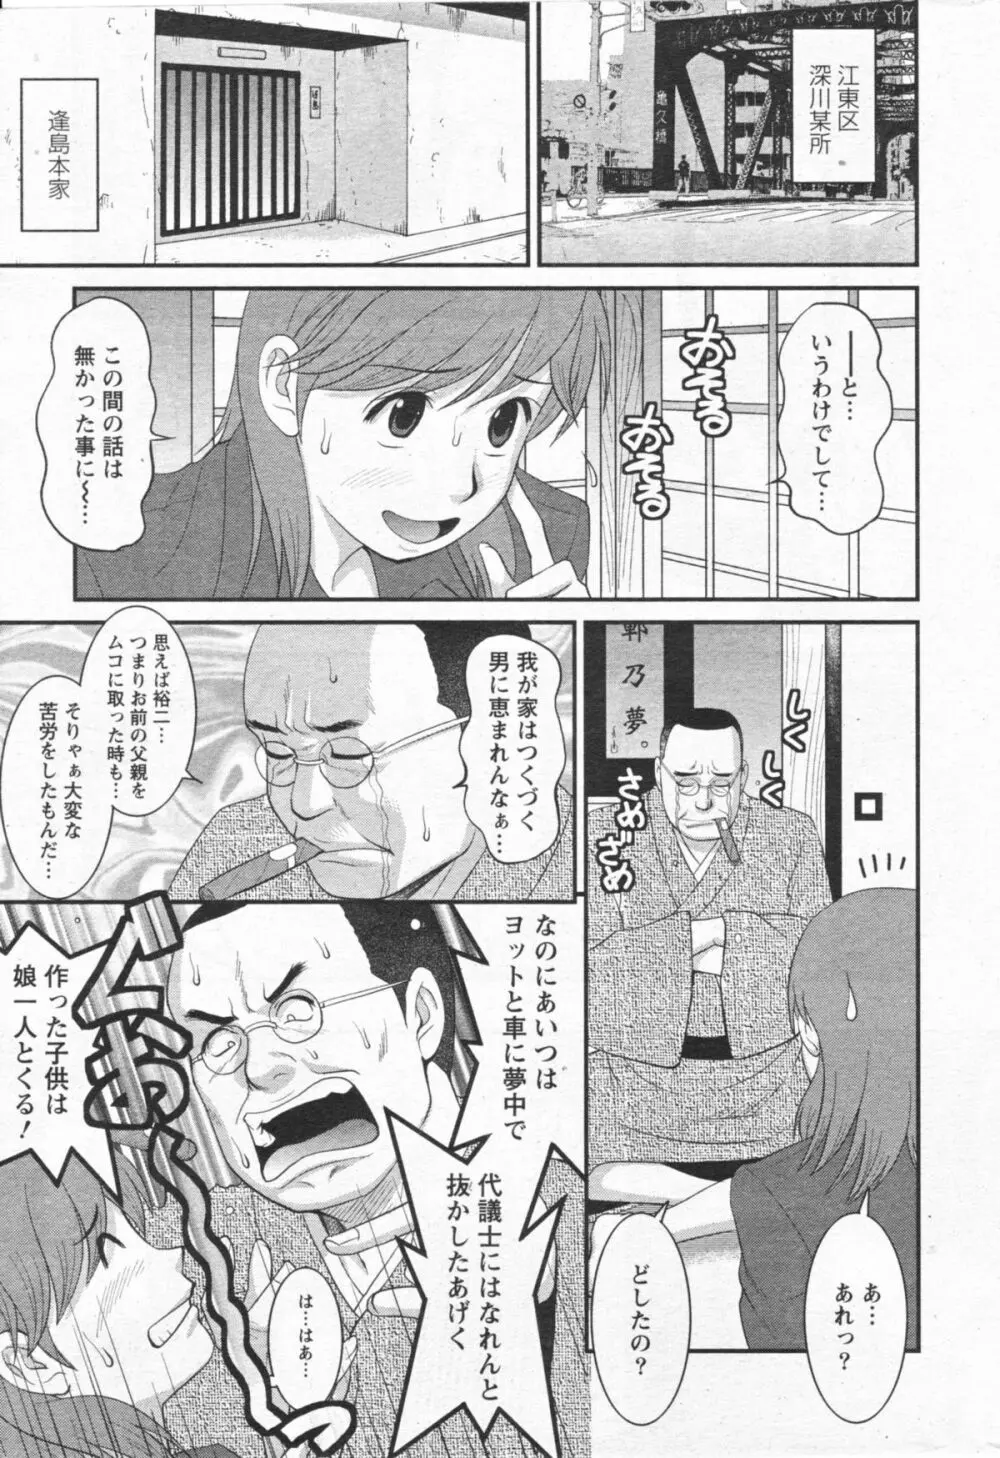 Haken no Muuko San 11 6ページ